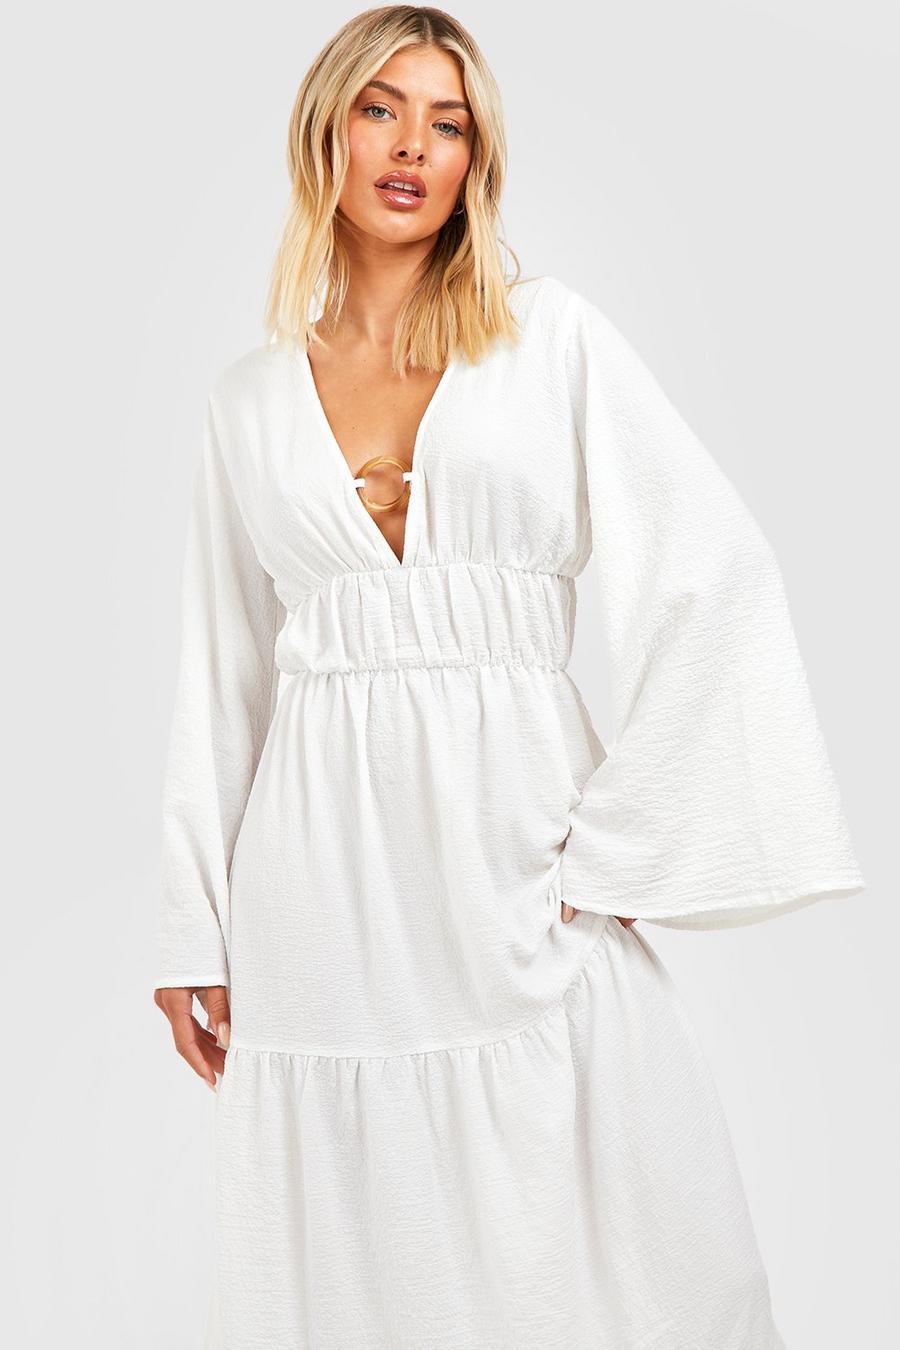 TEKSTUROWANa biała sukienka maxi dekolt styl boho 